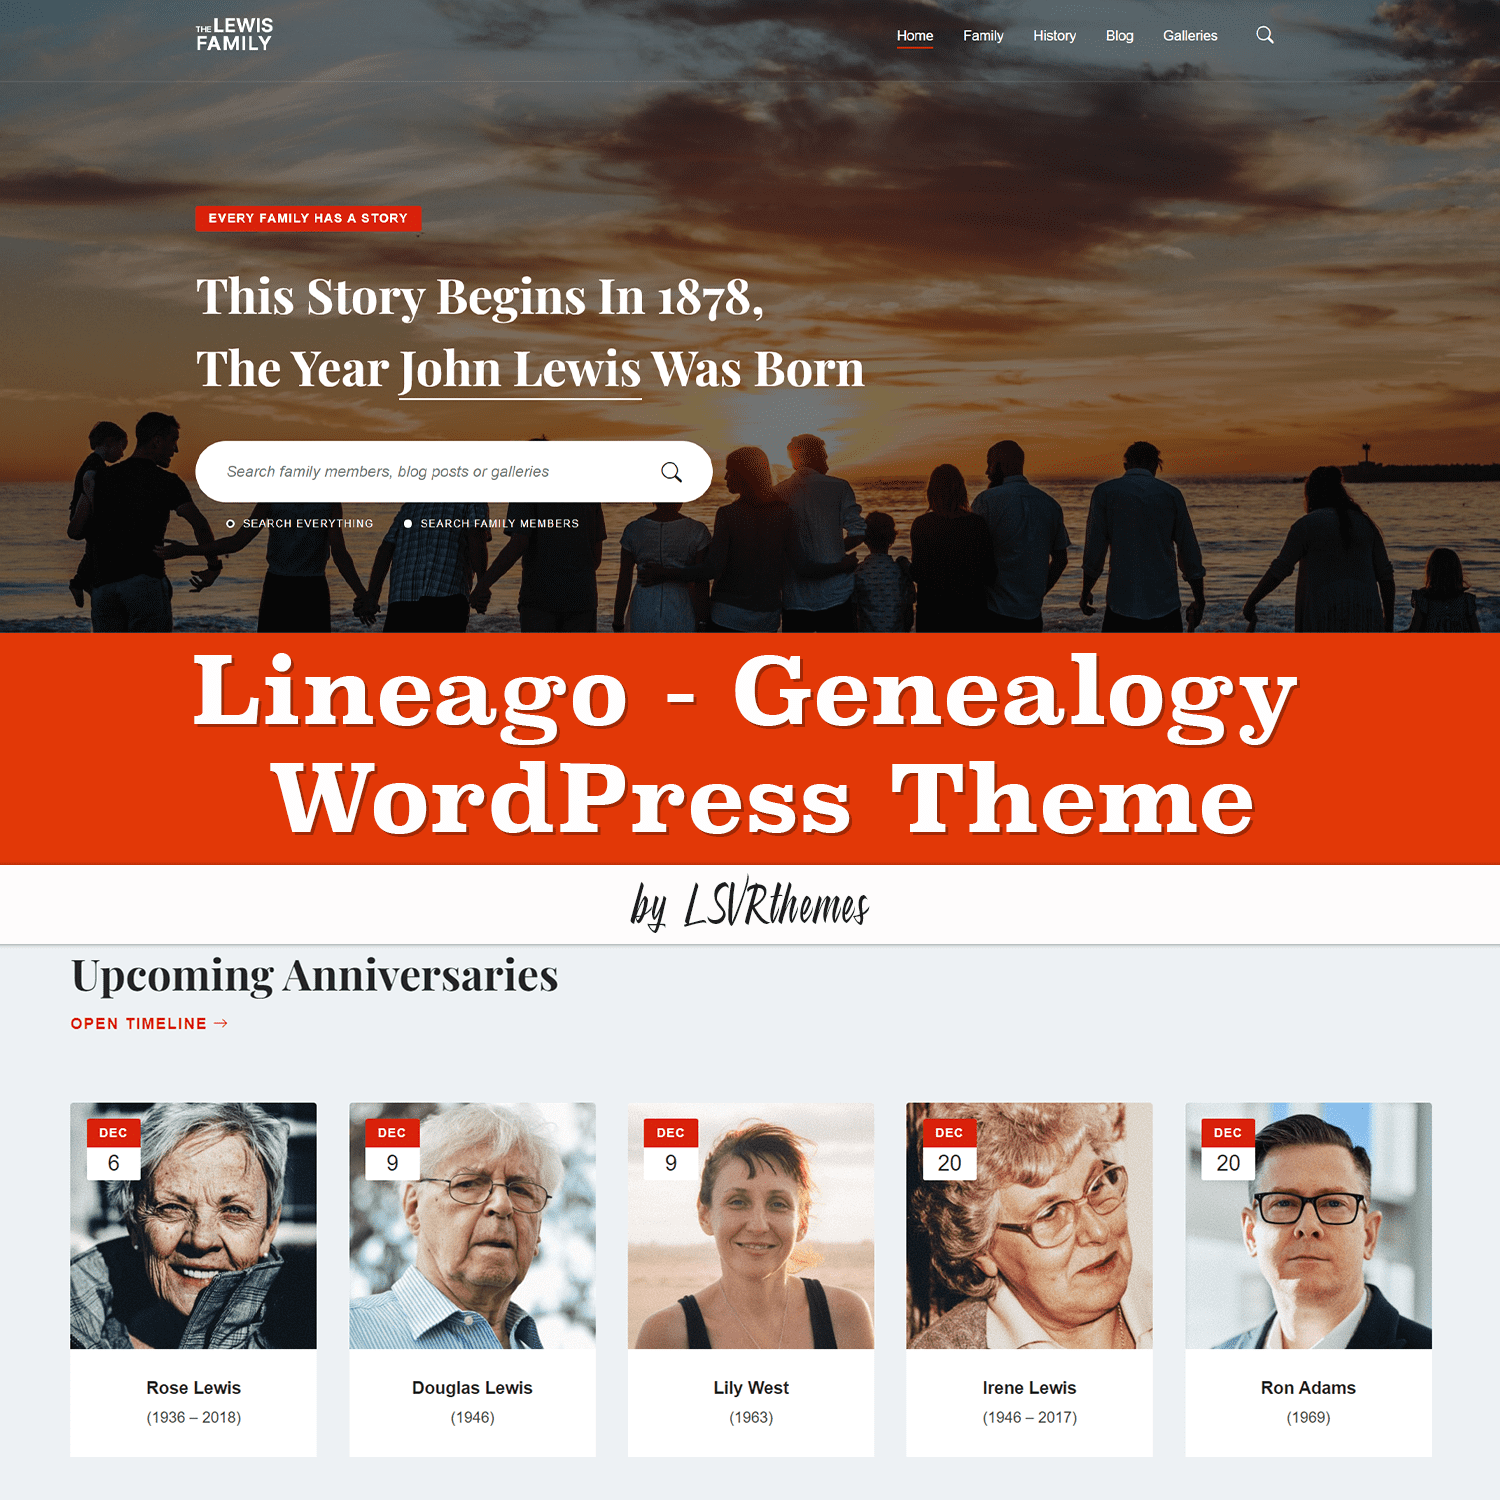 Lineago - Genealogy WordPress Theme cover.